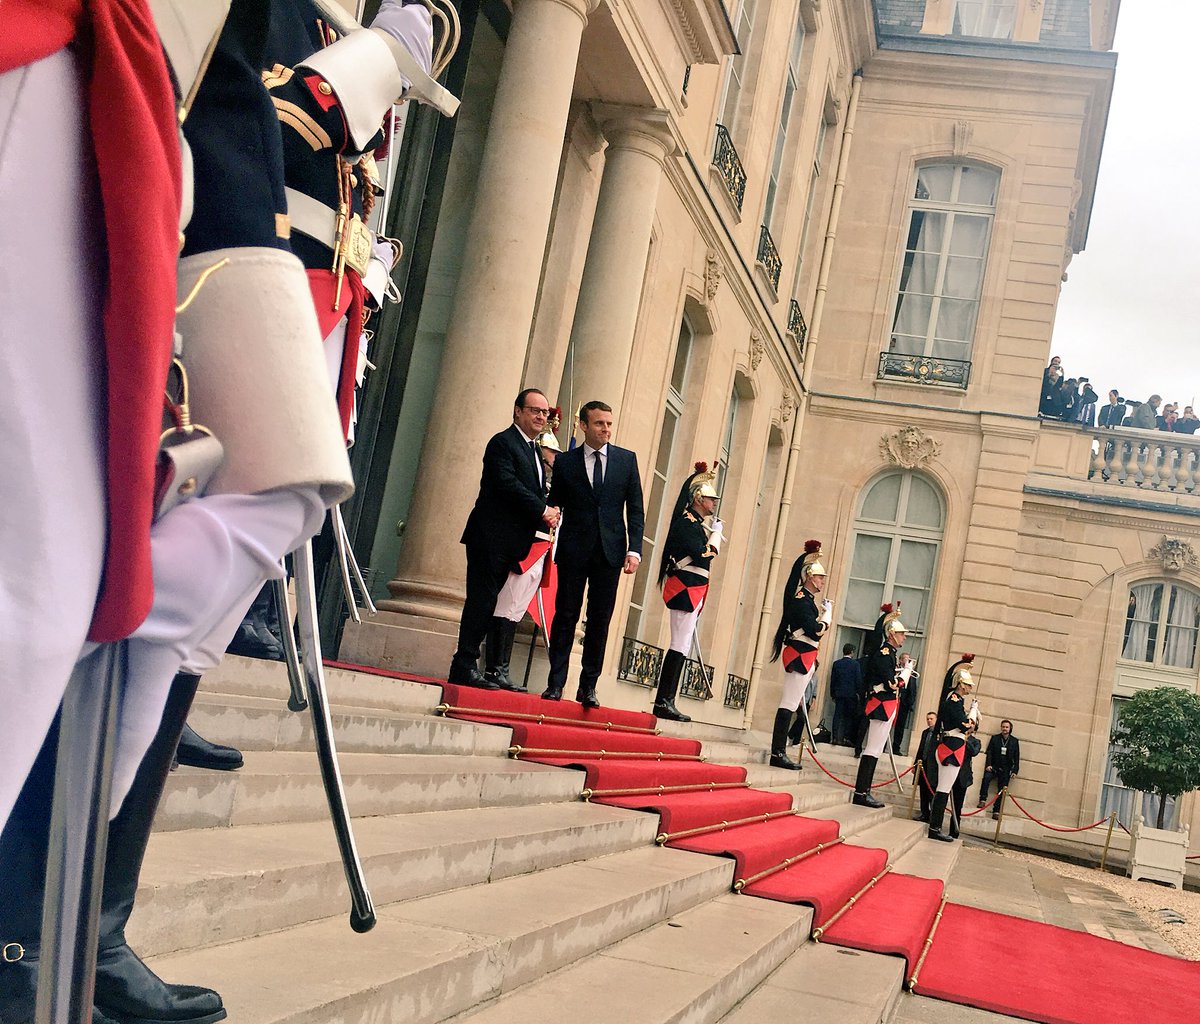 Макрон в спортзале. Дворец Макрона. Инаугурация президента Франции. Инаугурация Макрона 2017. La République sous François Hollande Макрон.